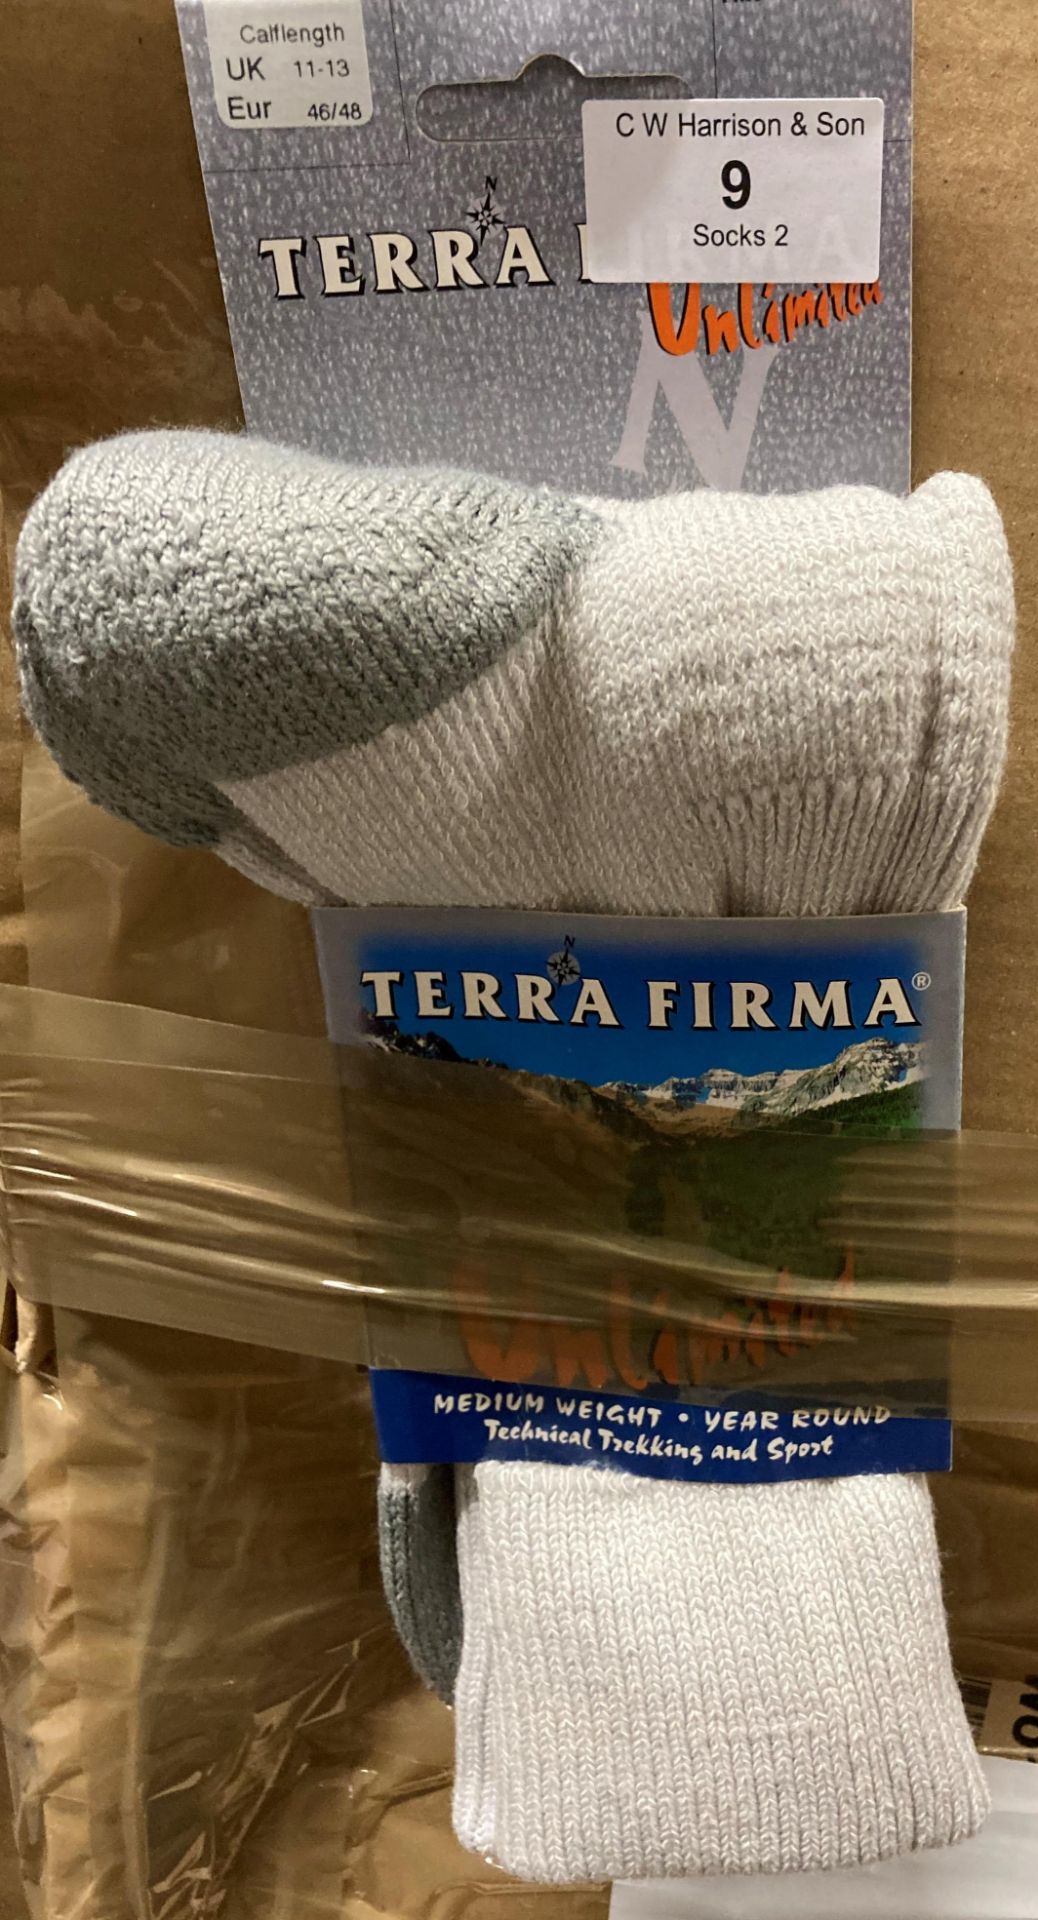 30 x pairs of Terra Firma trekking socks (wool/nylon) size 9-11,